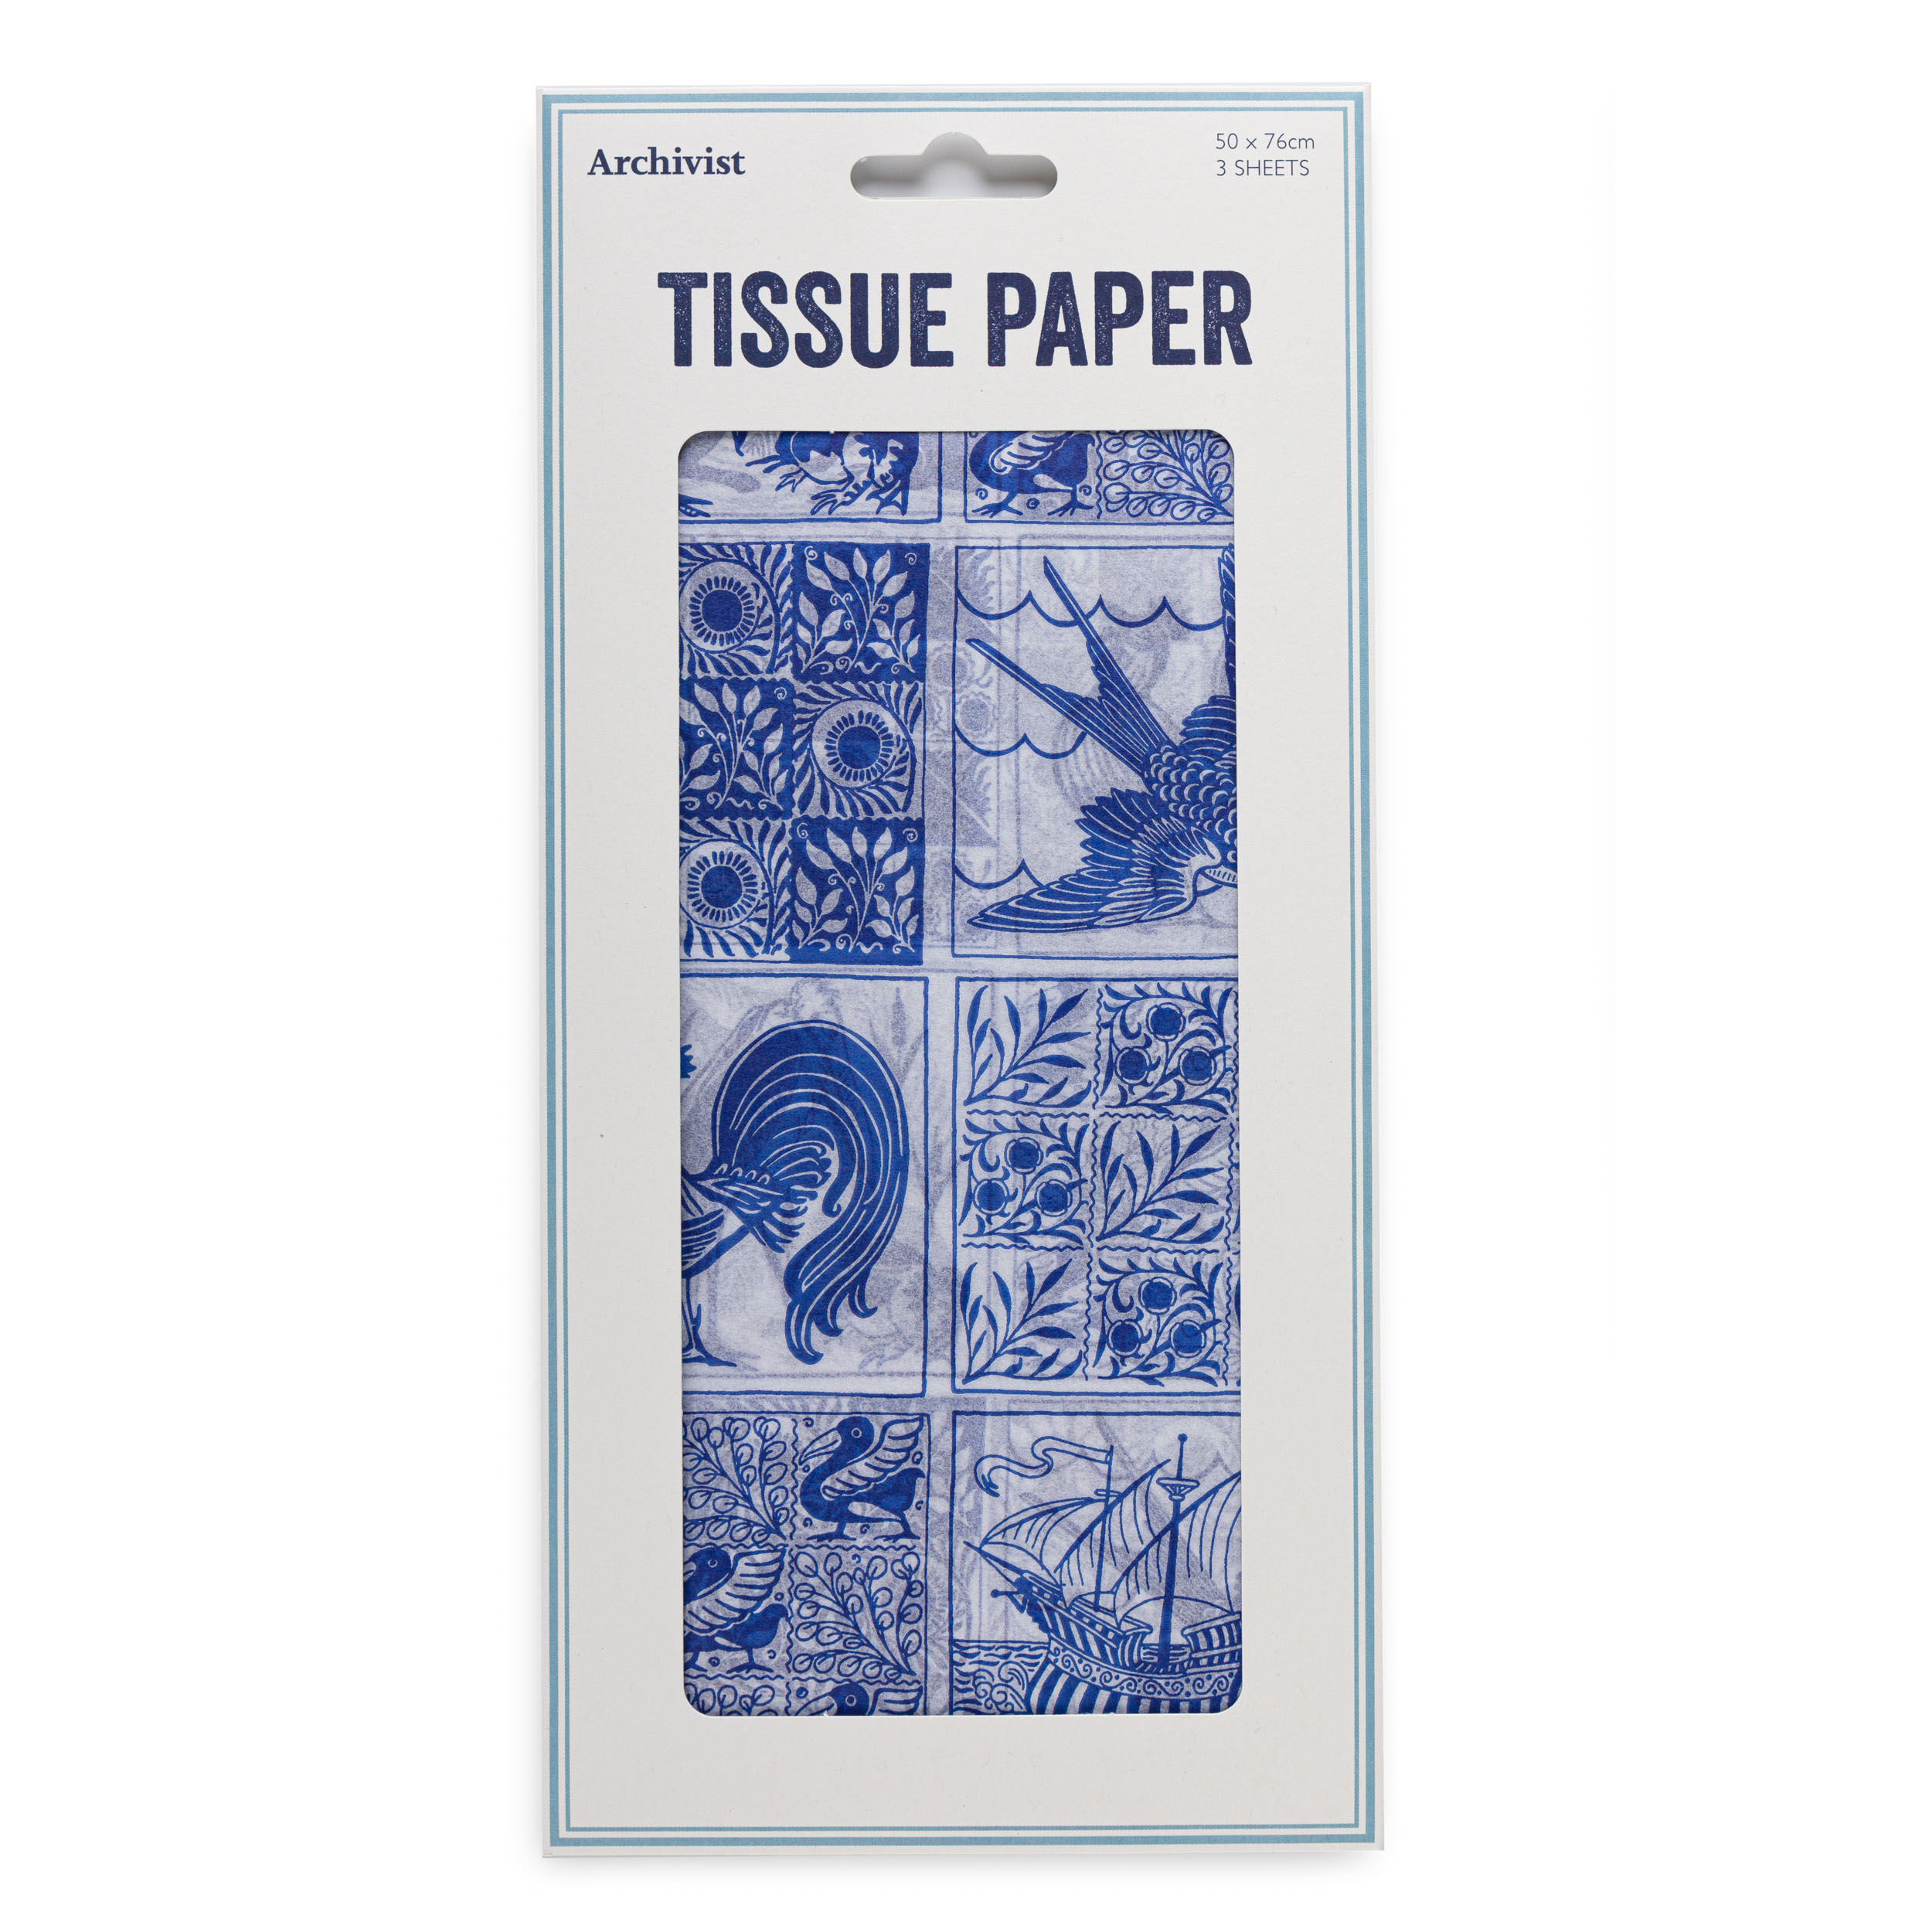 De Morgan Tissue - Tissue Paper - Archivist - from Archivist Gallery 